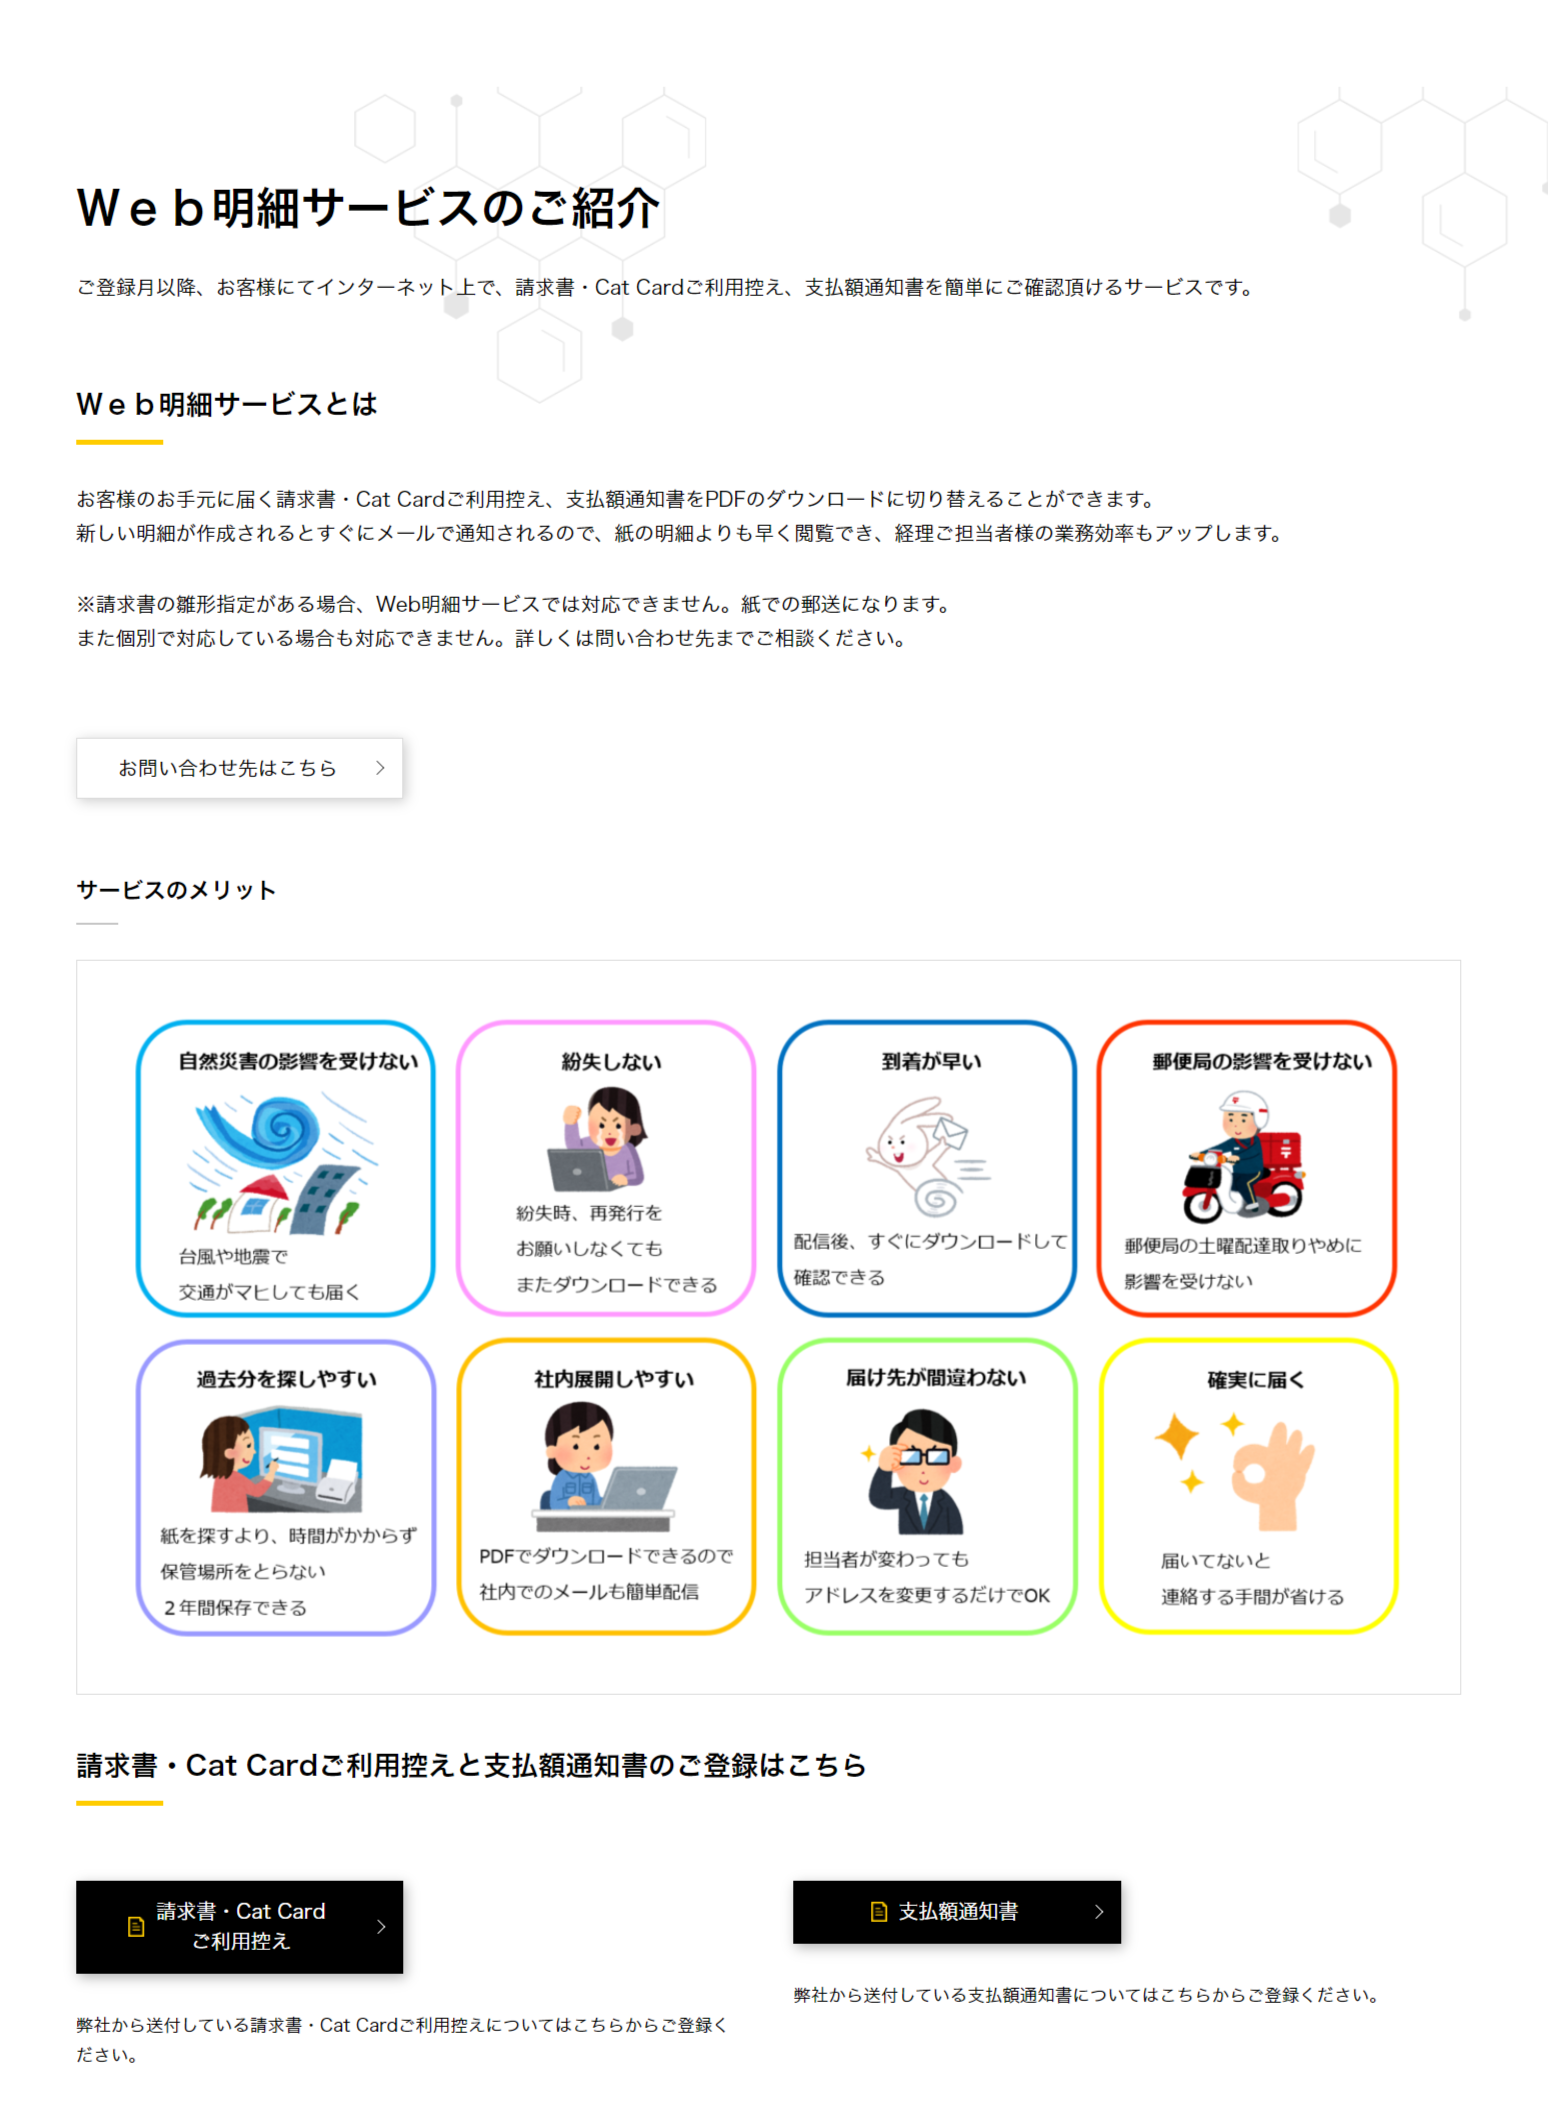 web_meisai_service_screenshot.png